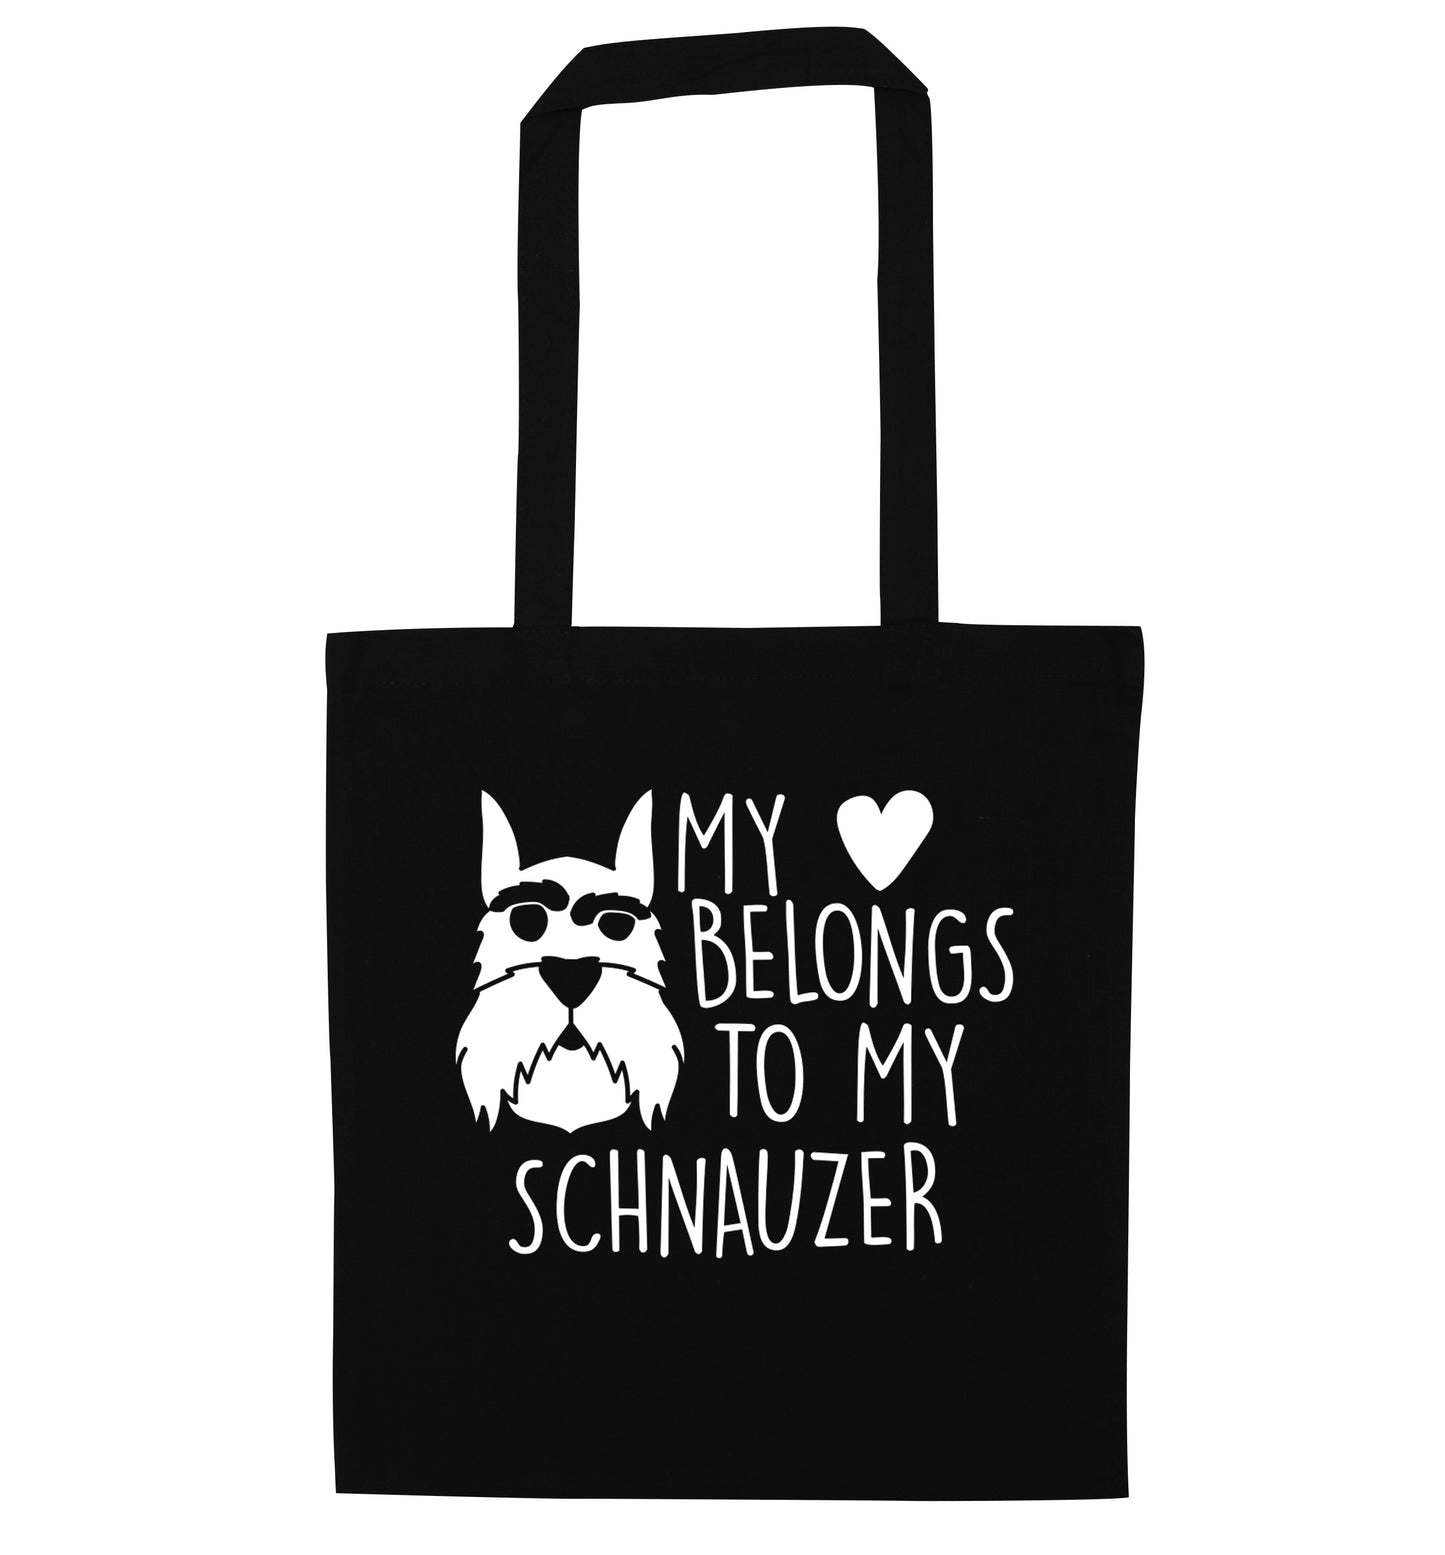 My heart belongs to my schnauzer black tote bag